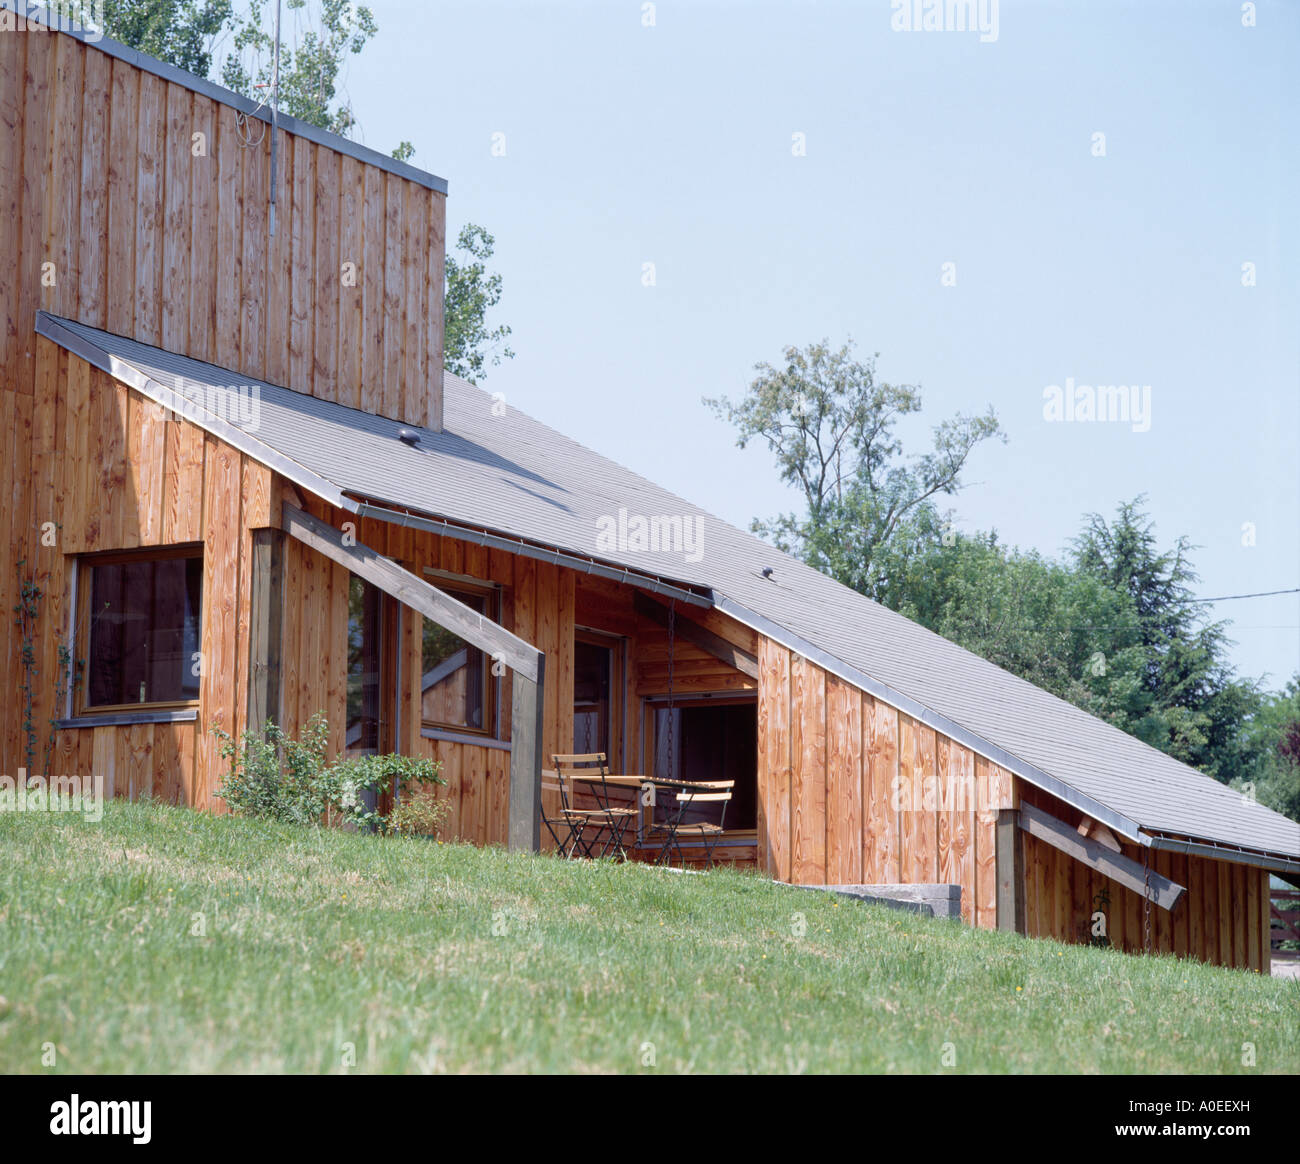 Casa moderna de madera con techo inclinado en Hillside Fotografía de stock  - Alamy